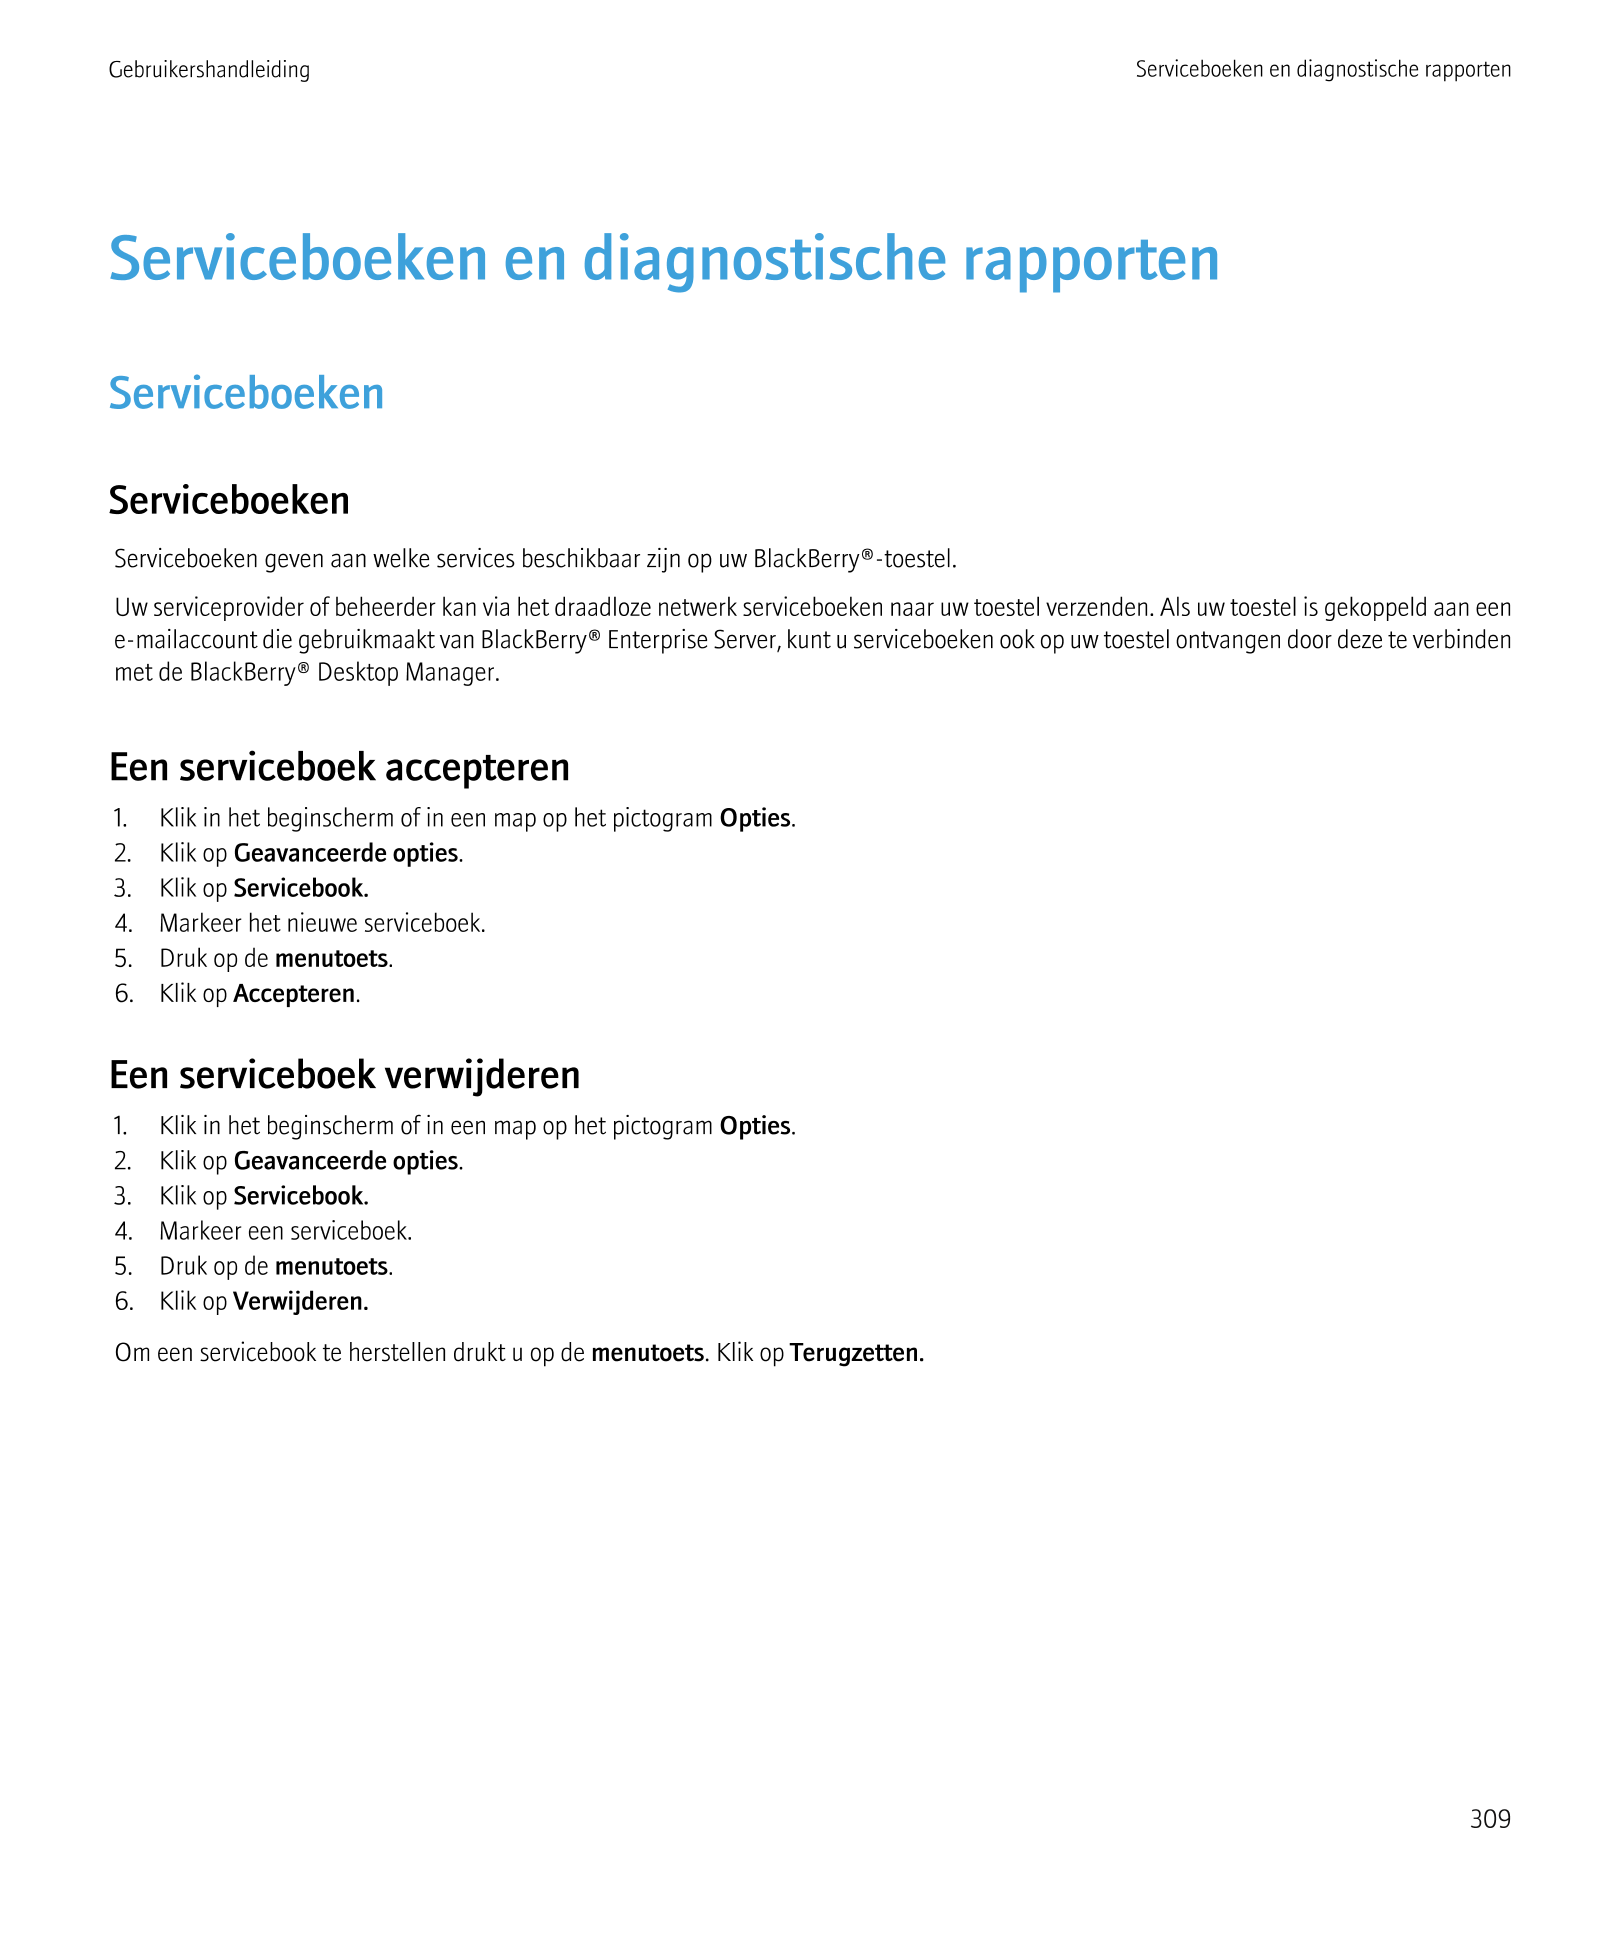 Gebruikershandleiding Serviceboeken en diagnostische rapporten
Serviceboeken en diagnostische rapporten
Serviceboeken
Serviceboe